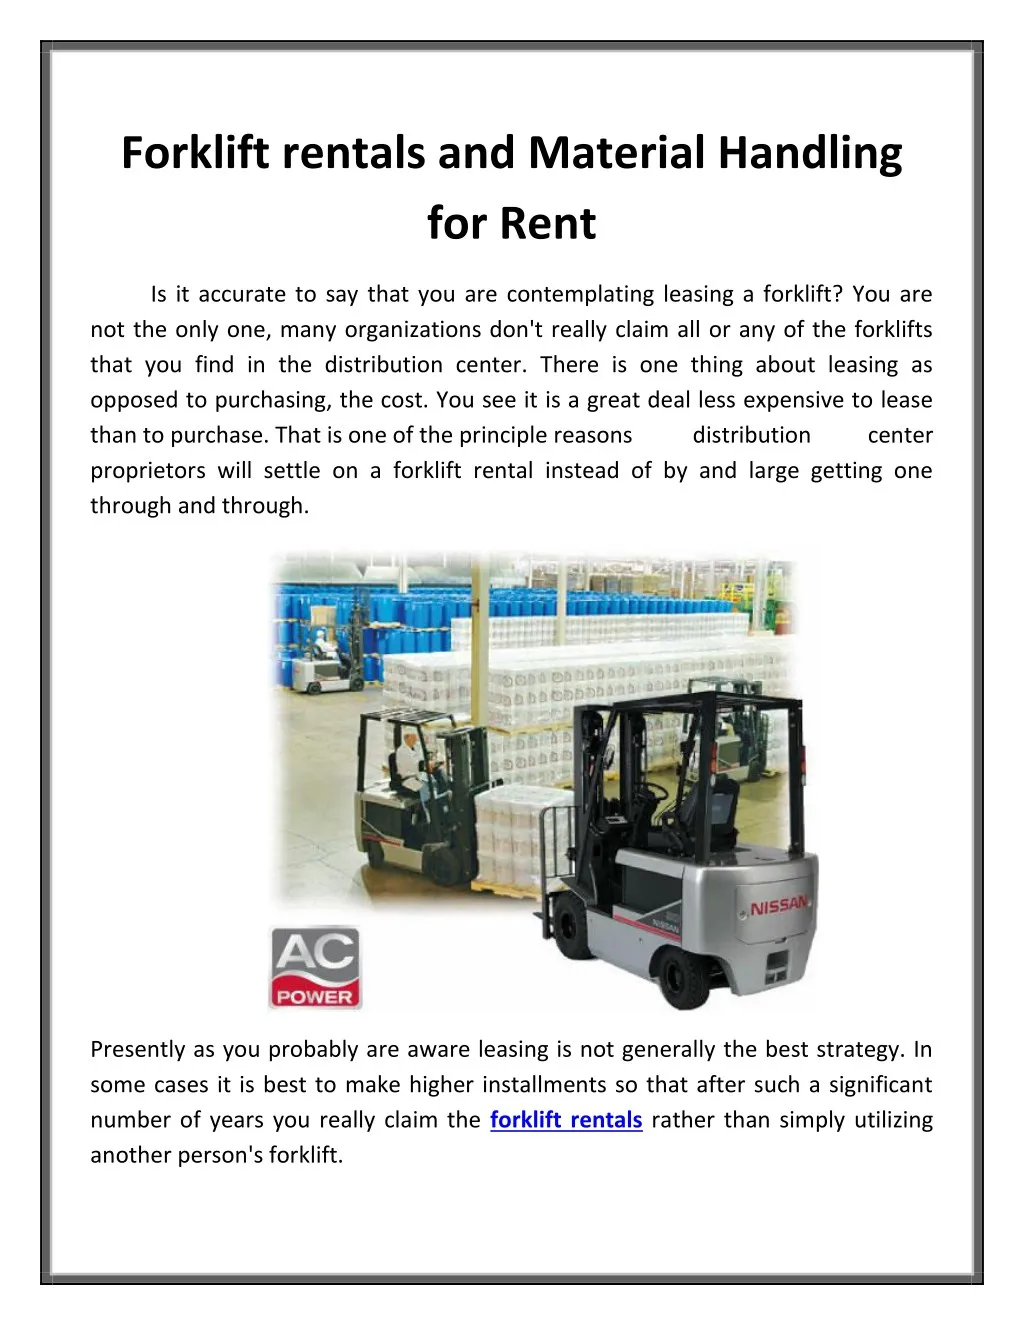 forklift rentals and material handling for rent